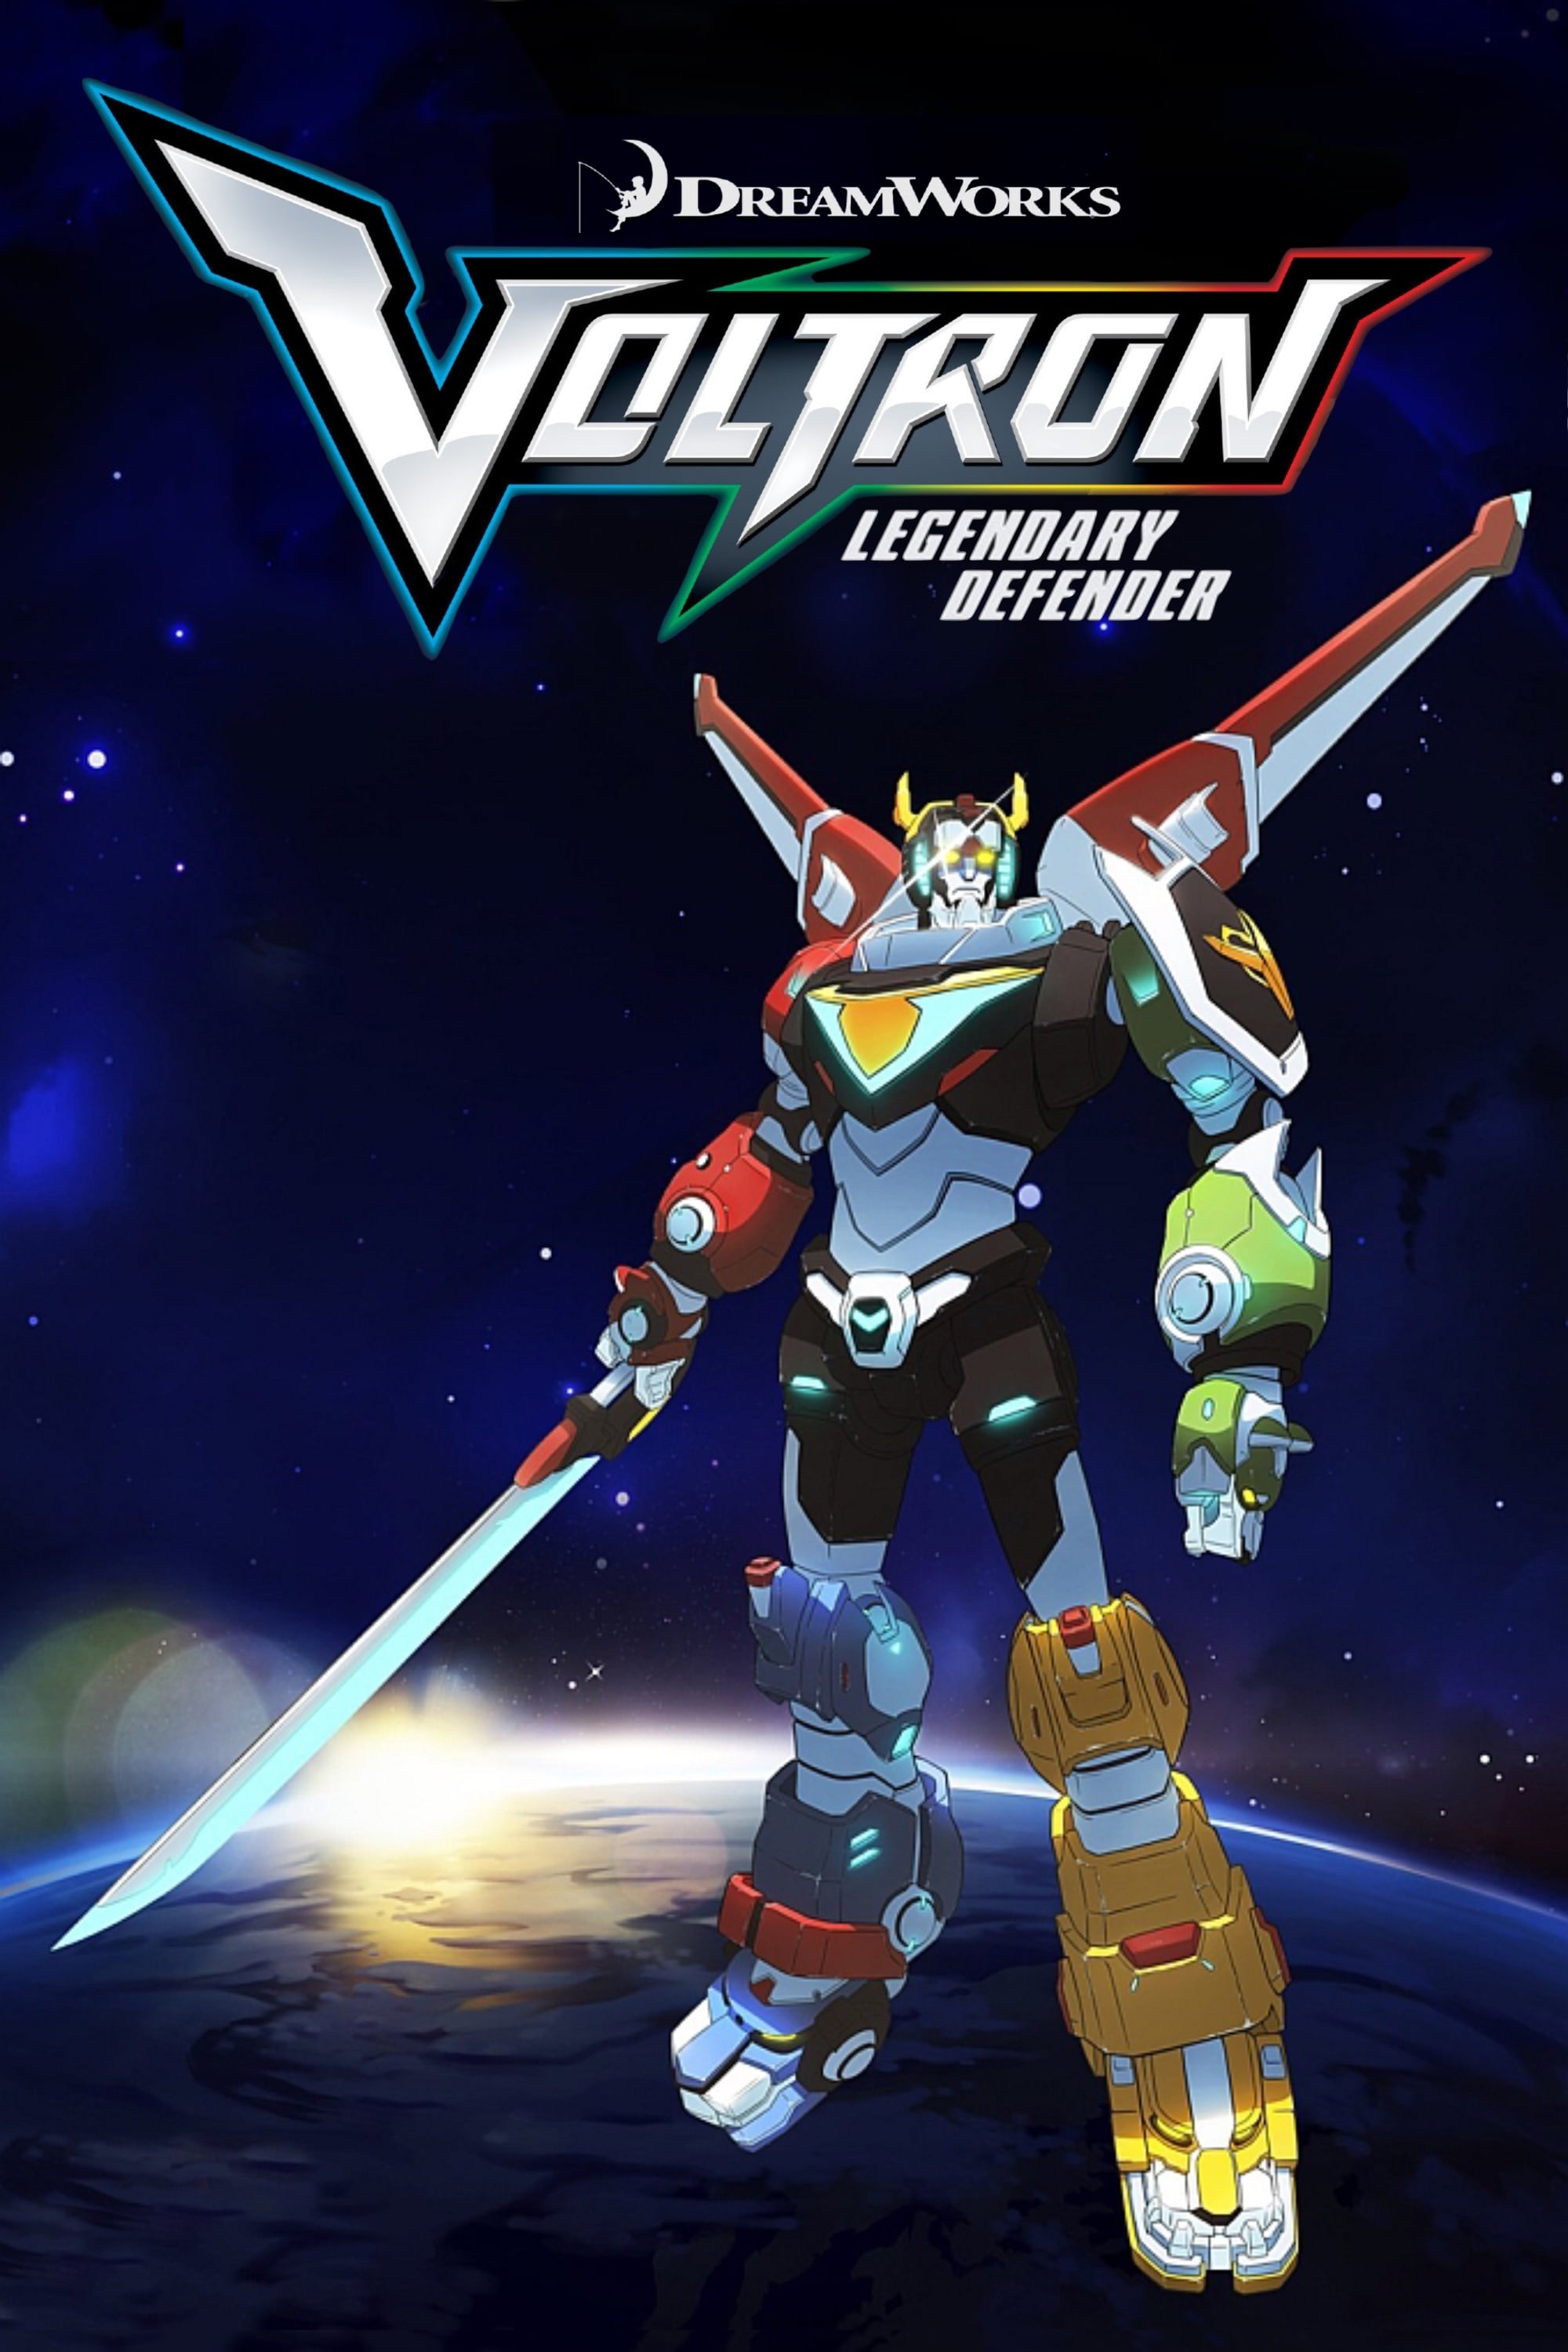 Voltron: Legendary Defender poster